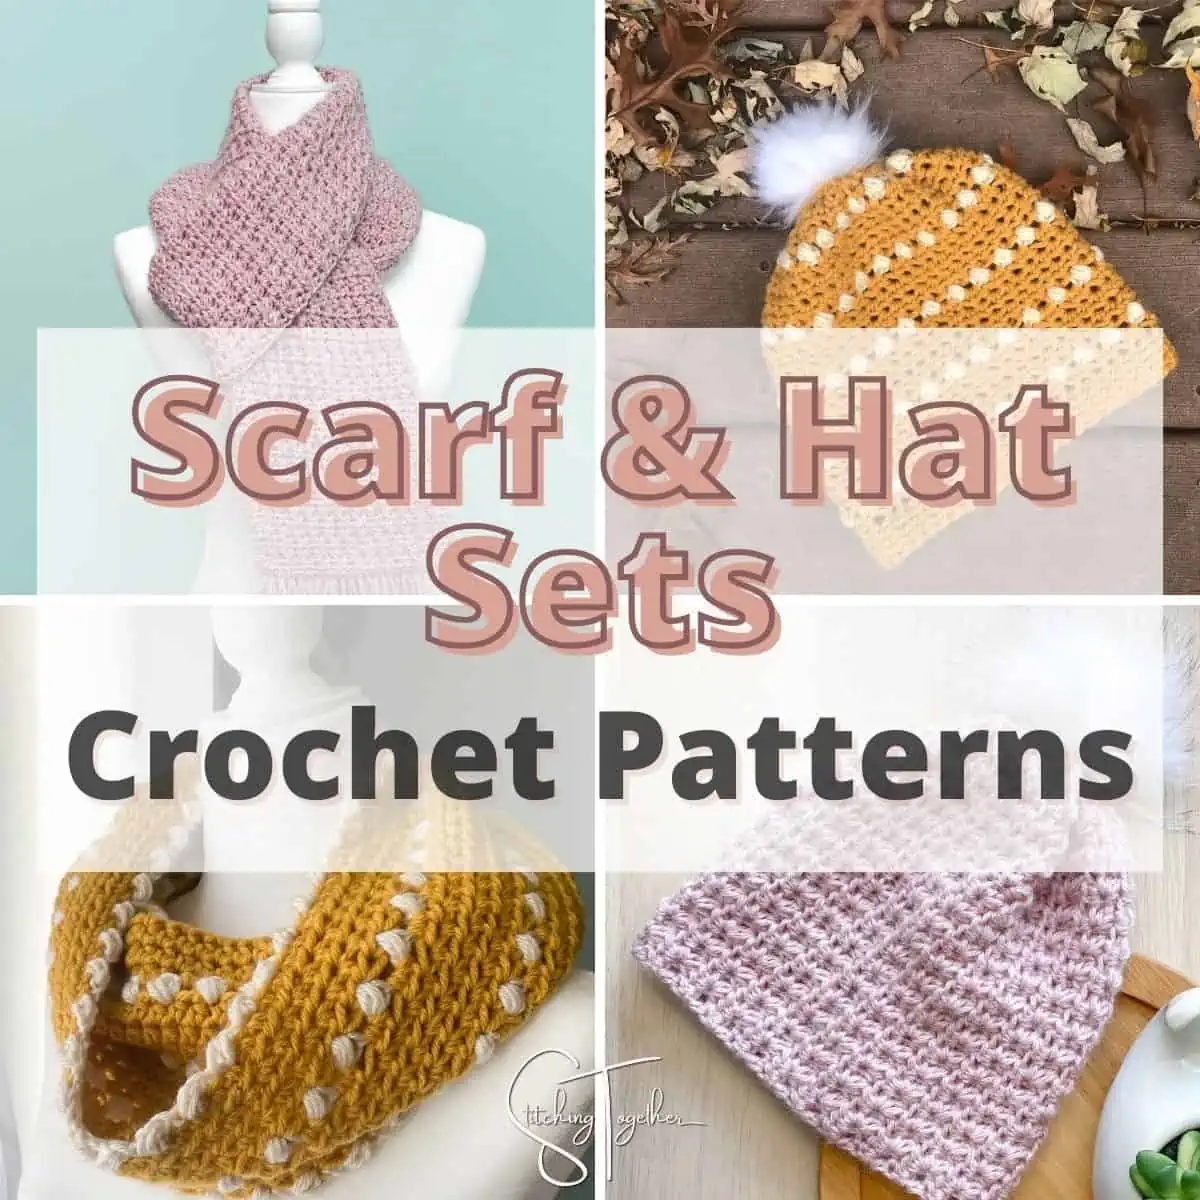  Hotop Crochet Kit for Beginners Kids Adults Christmas